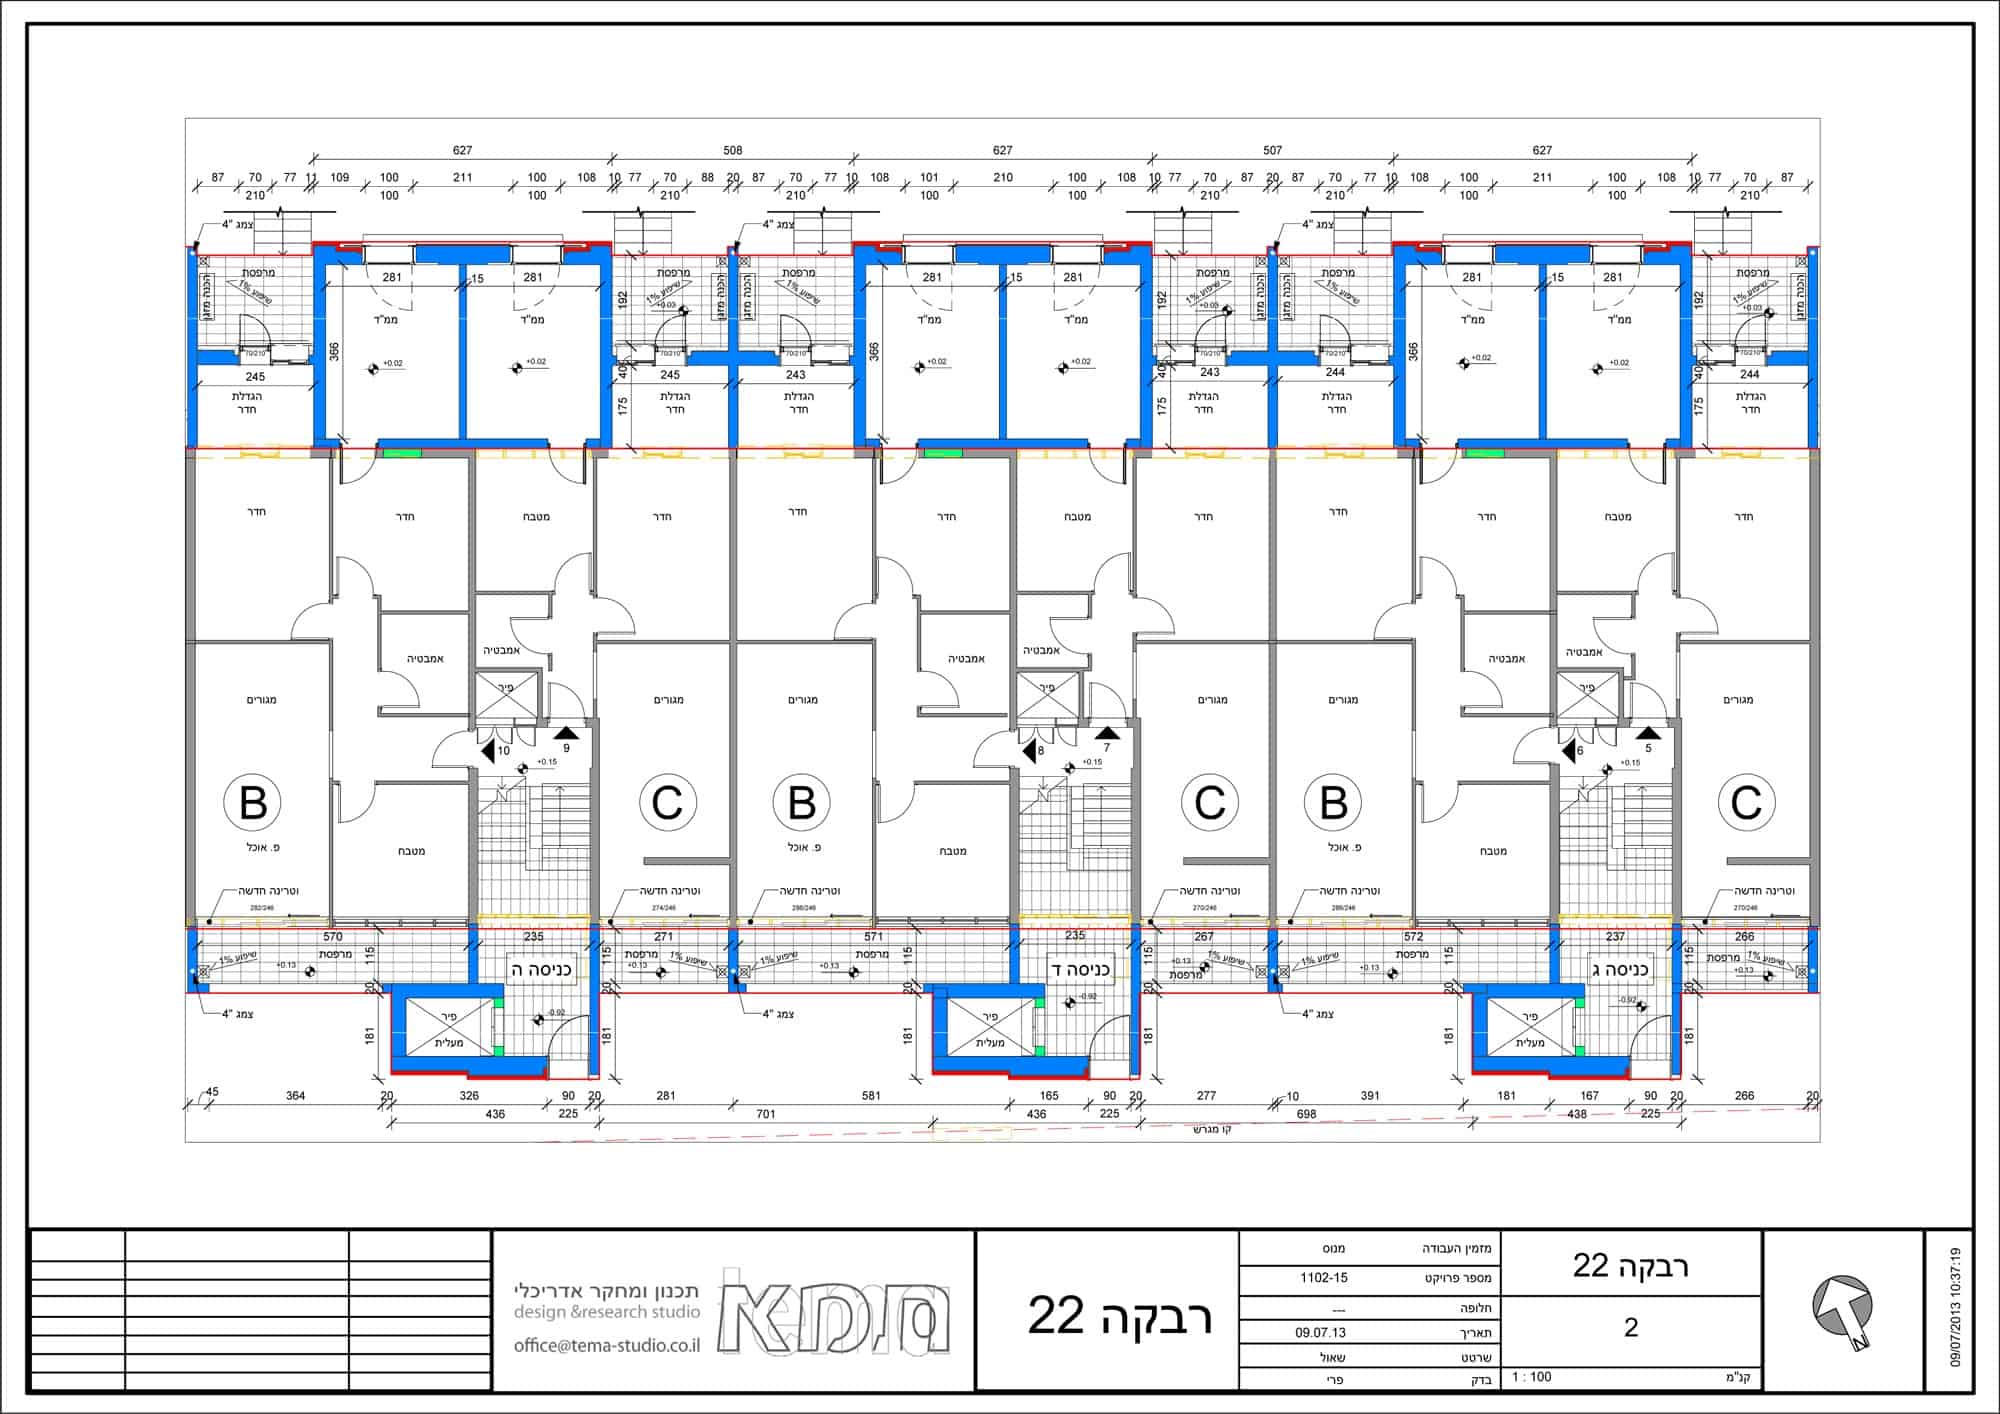 Rivka 22, Jerusalem – Typical floor plan, entrances C-E